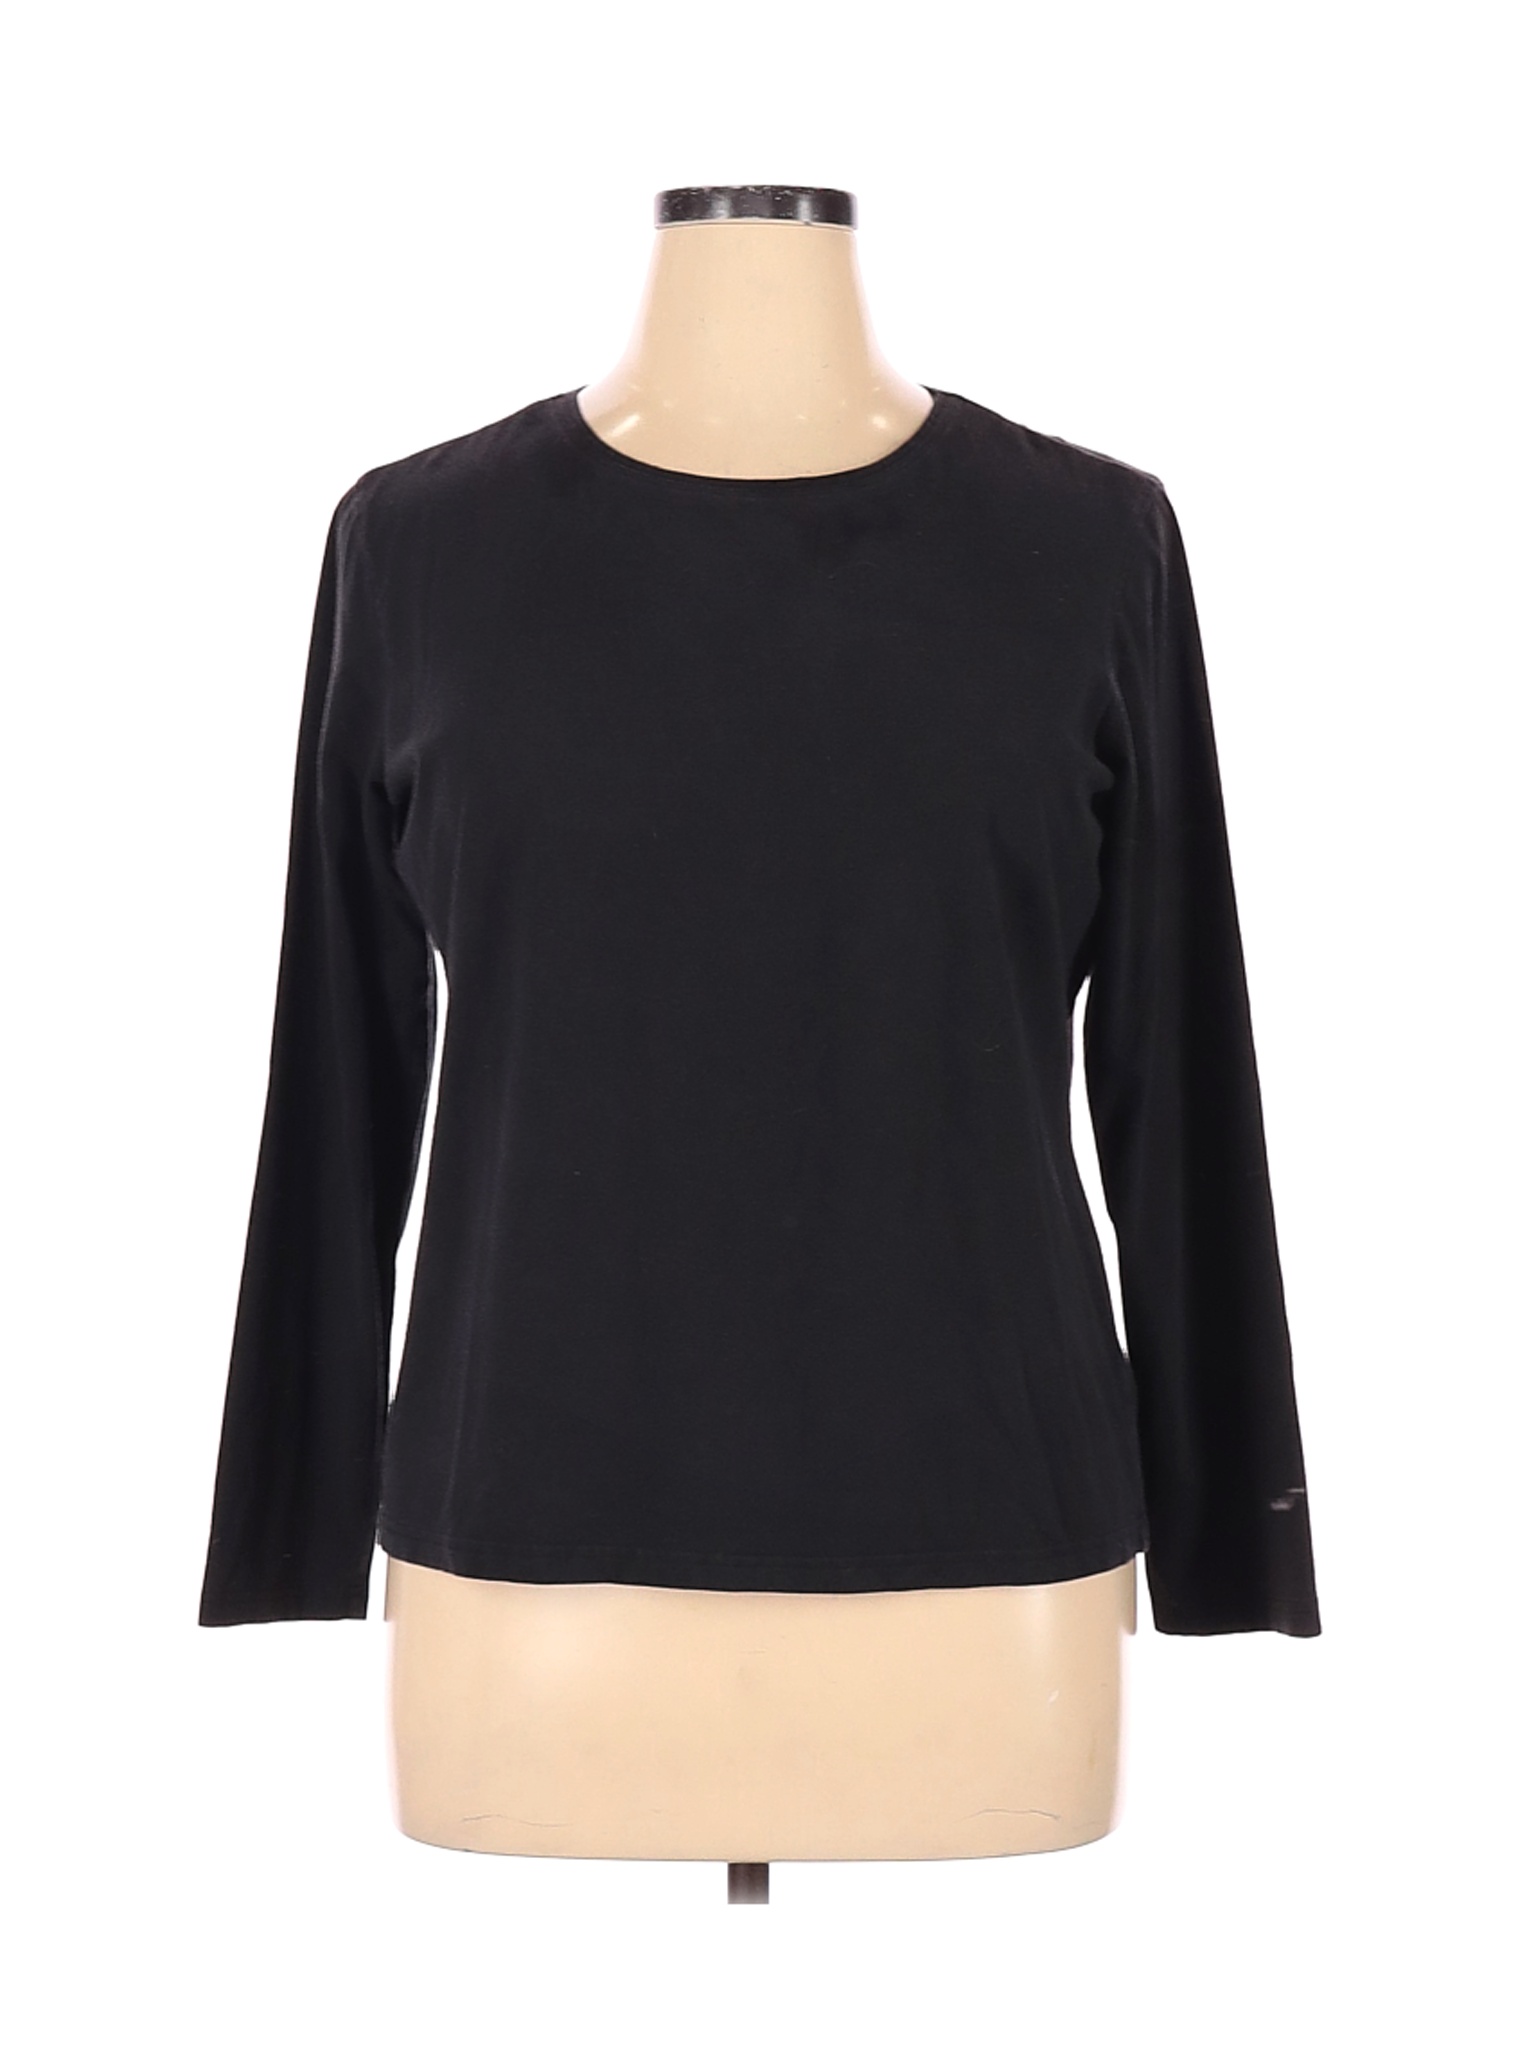 Talbots Women Black Long Sleeve T-Shirt XL | eBay